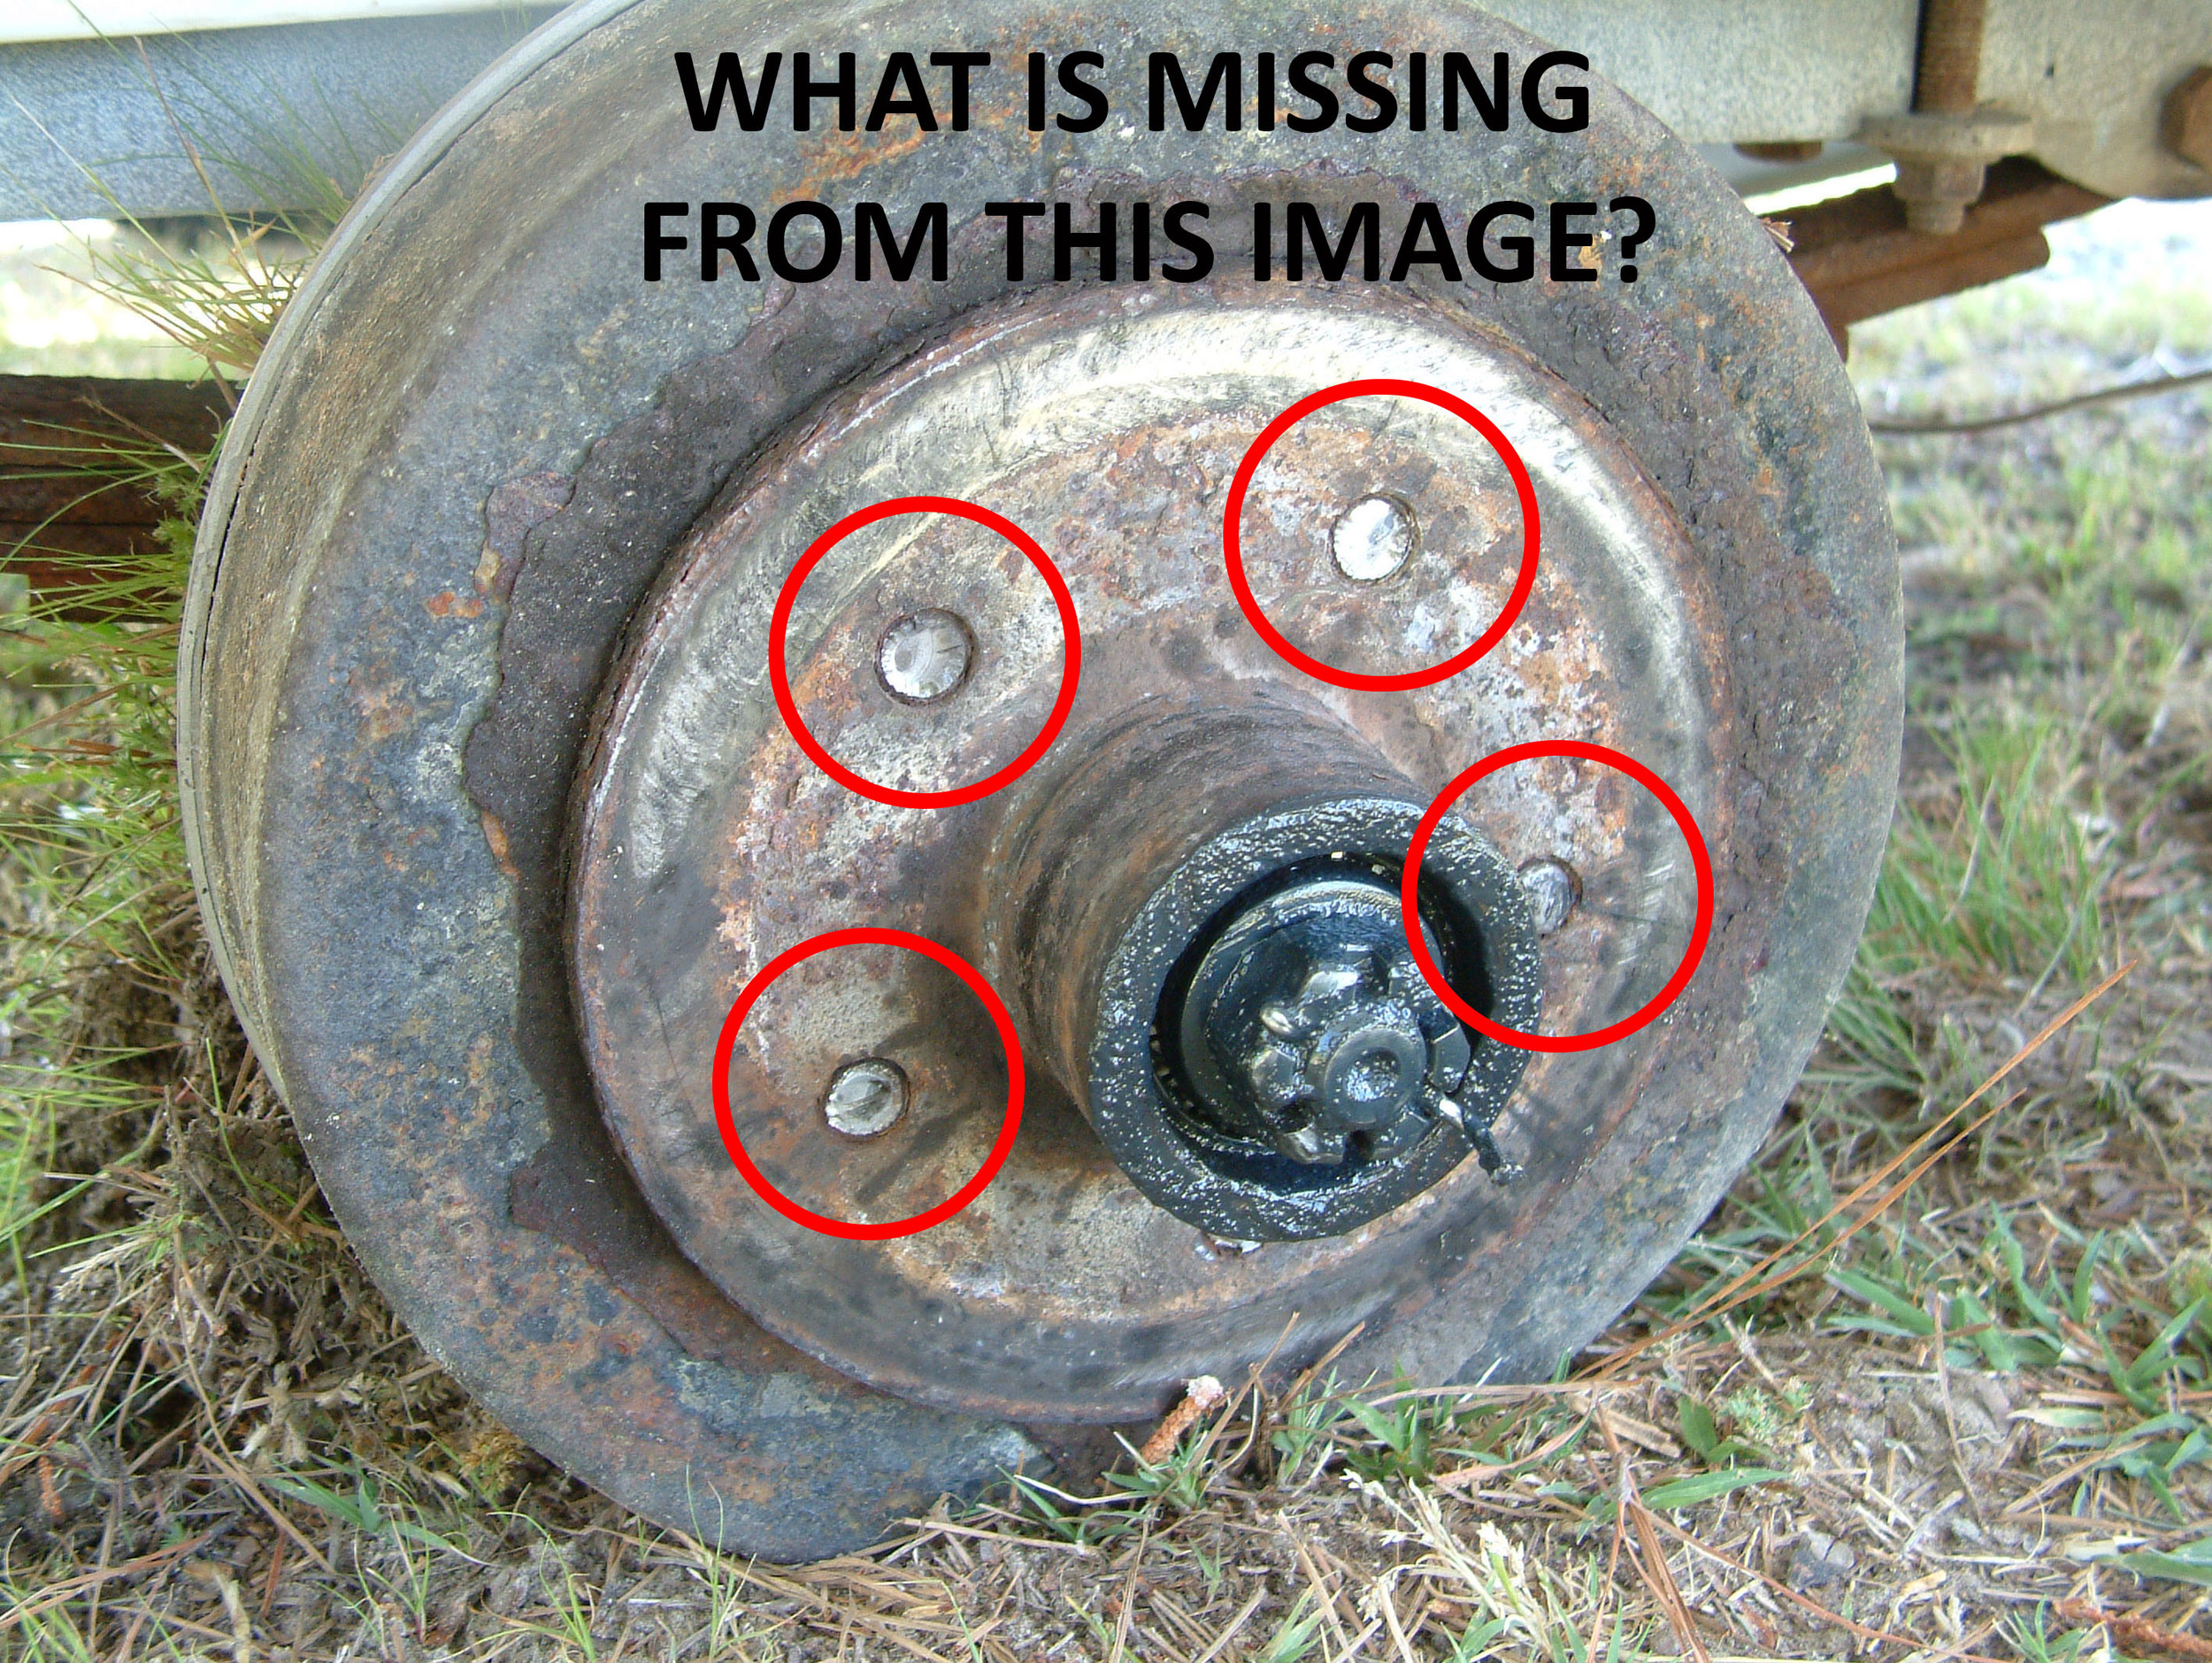 Note missing wheel studs